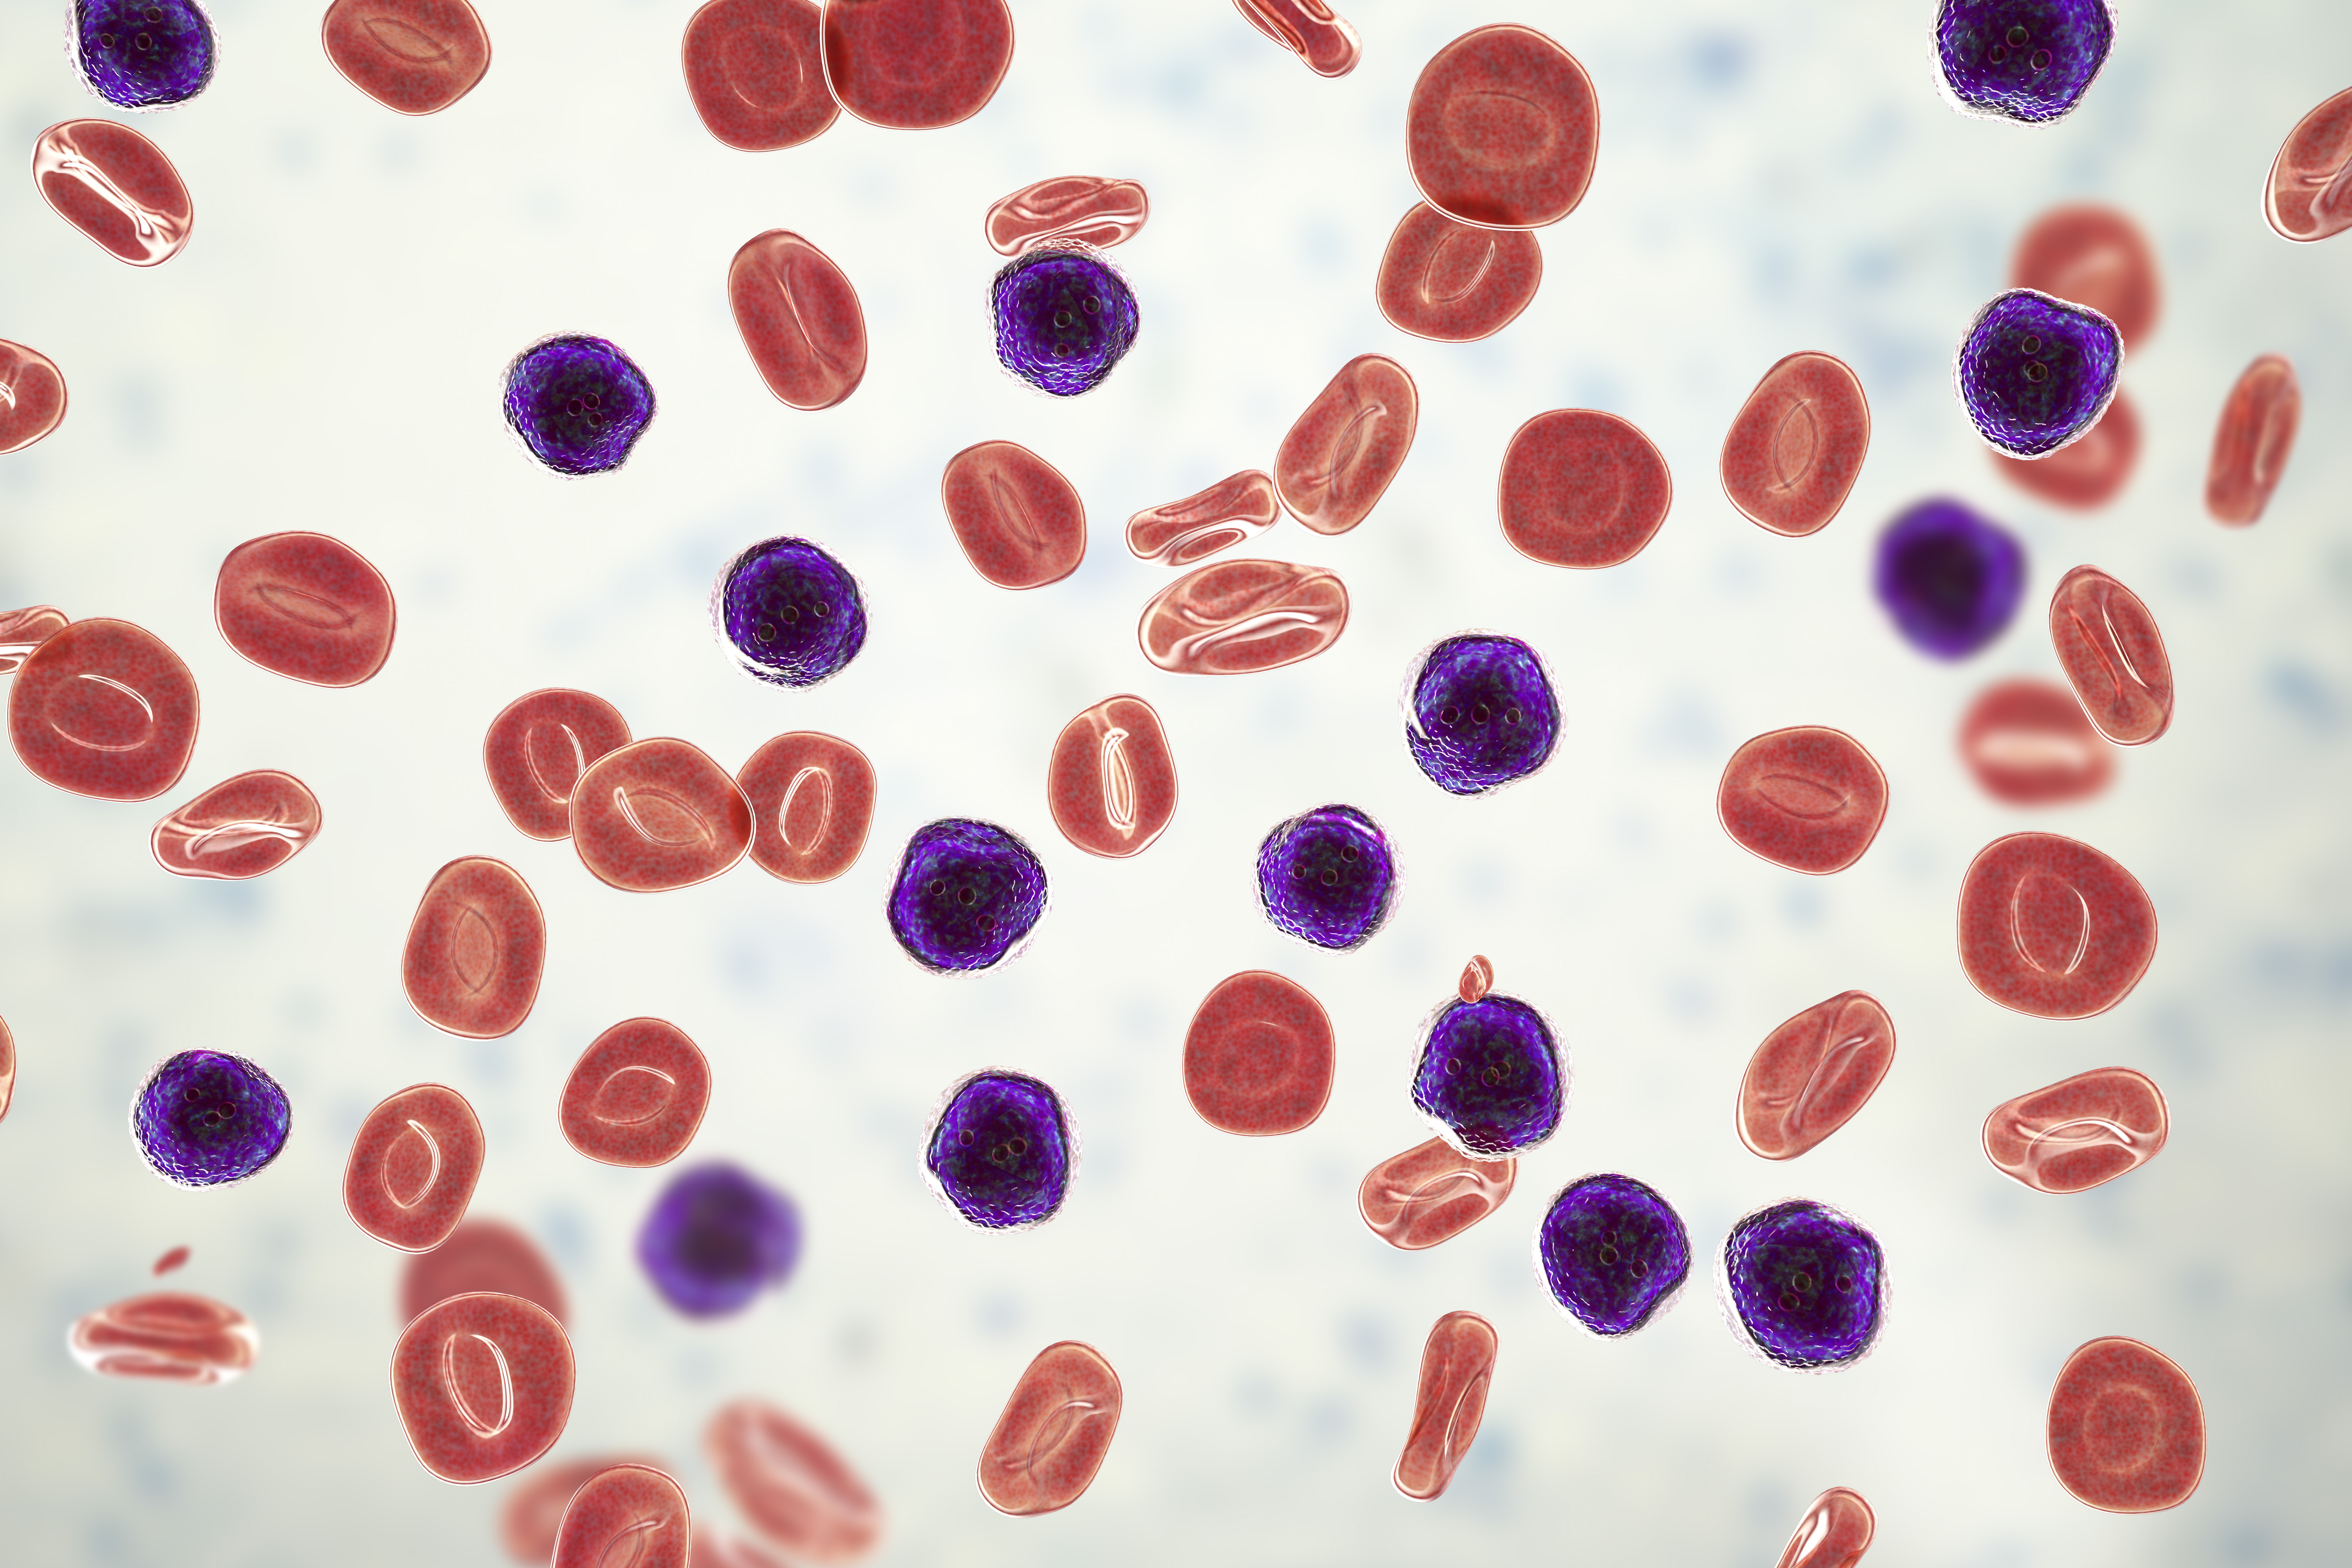 lymphoblast cell